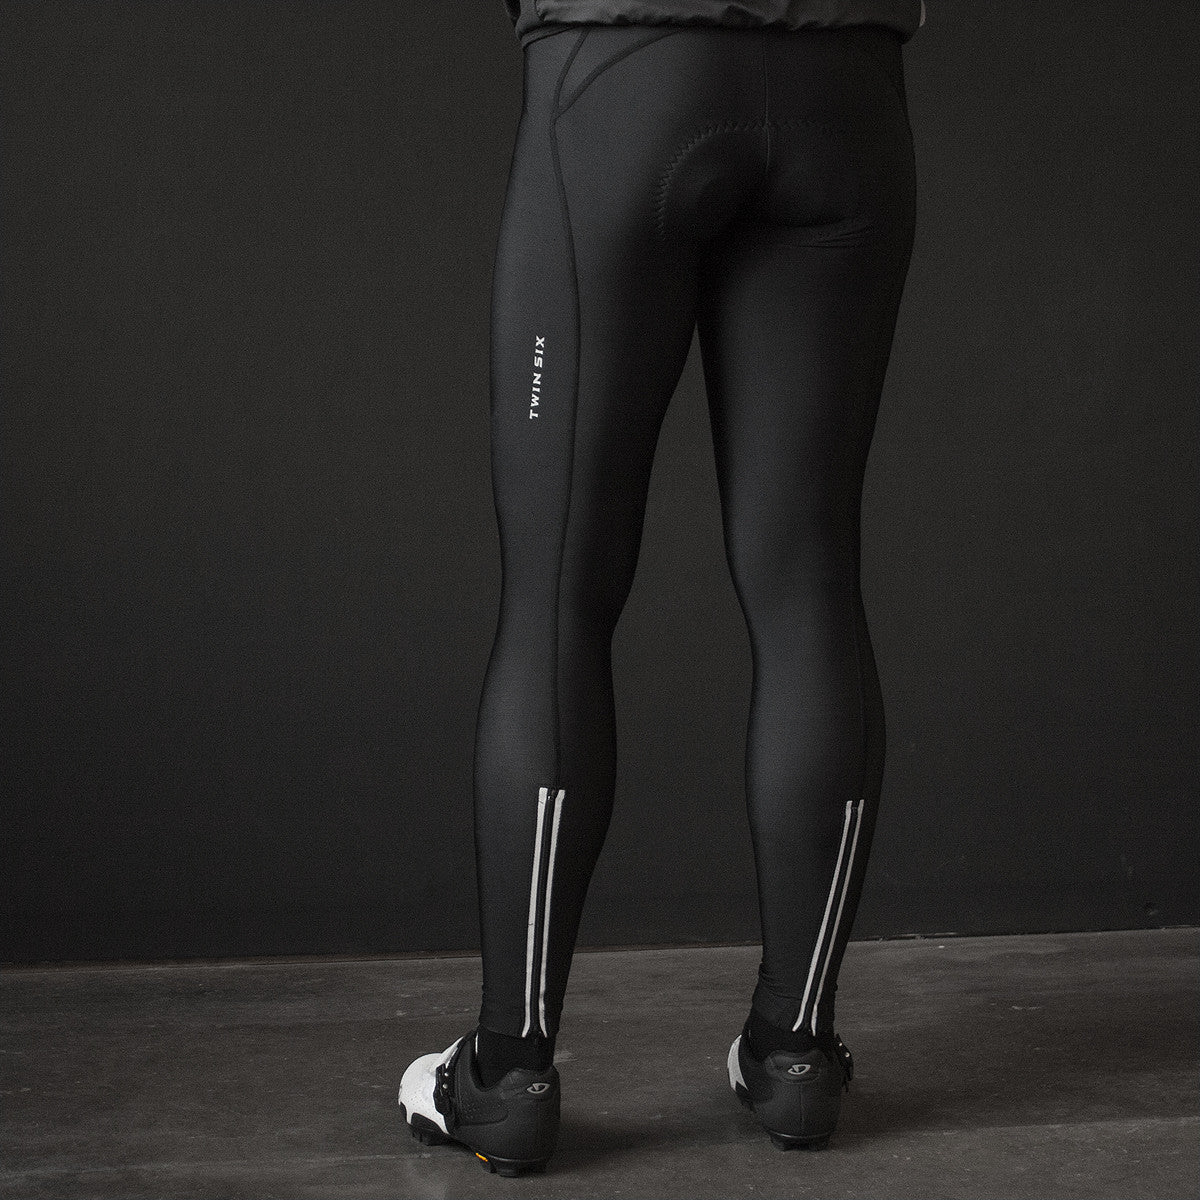 Twin Cycle Gear Black Cycling Bib Pants - XS unisex, Women's